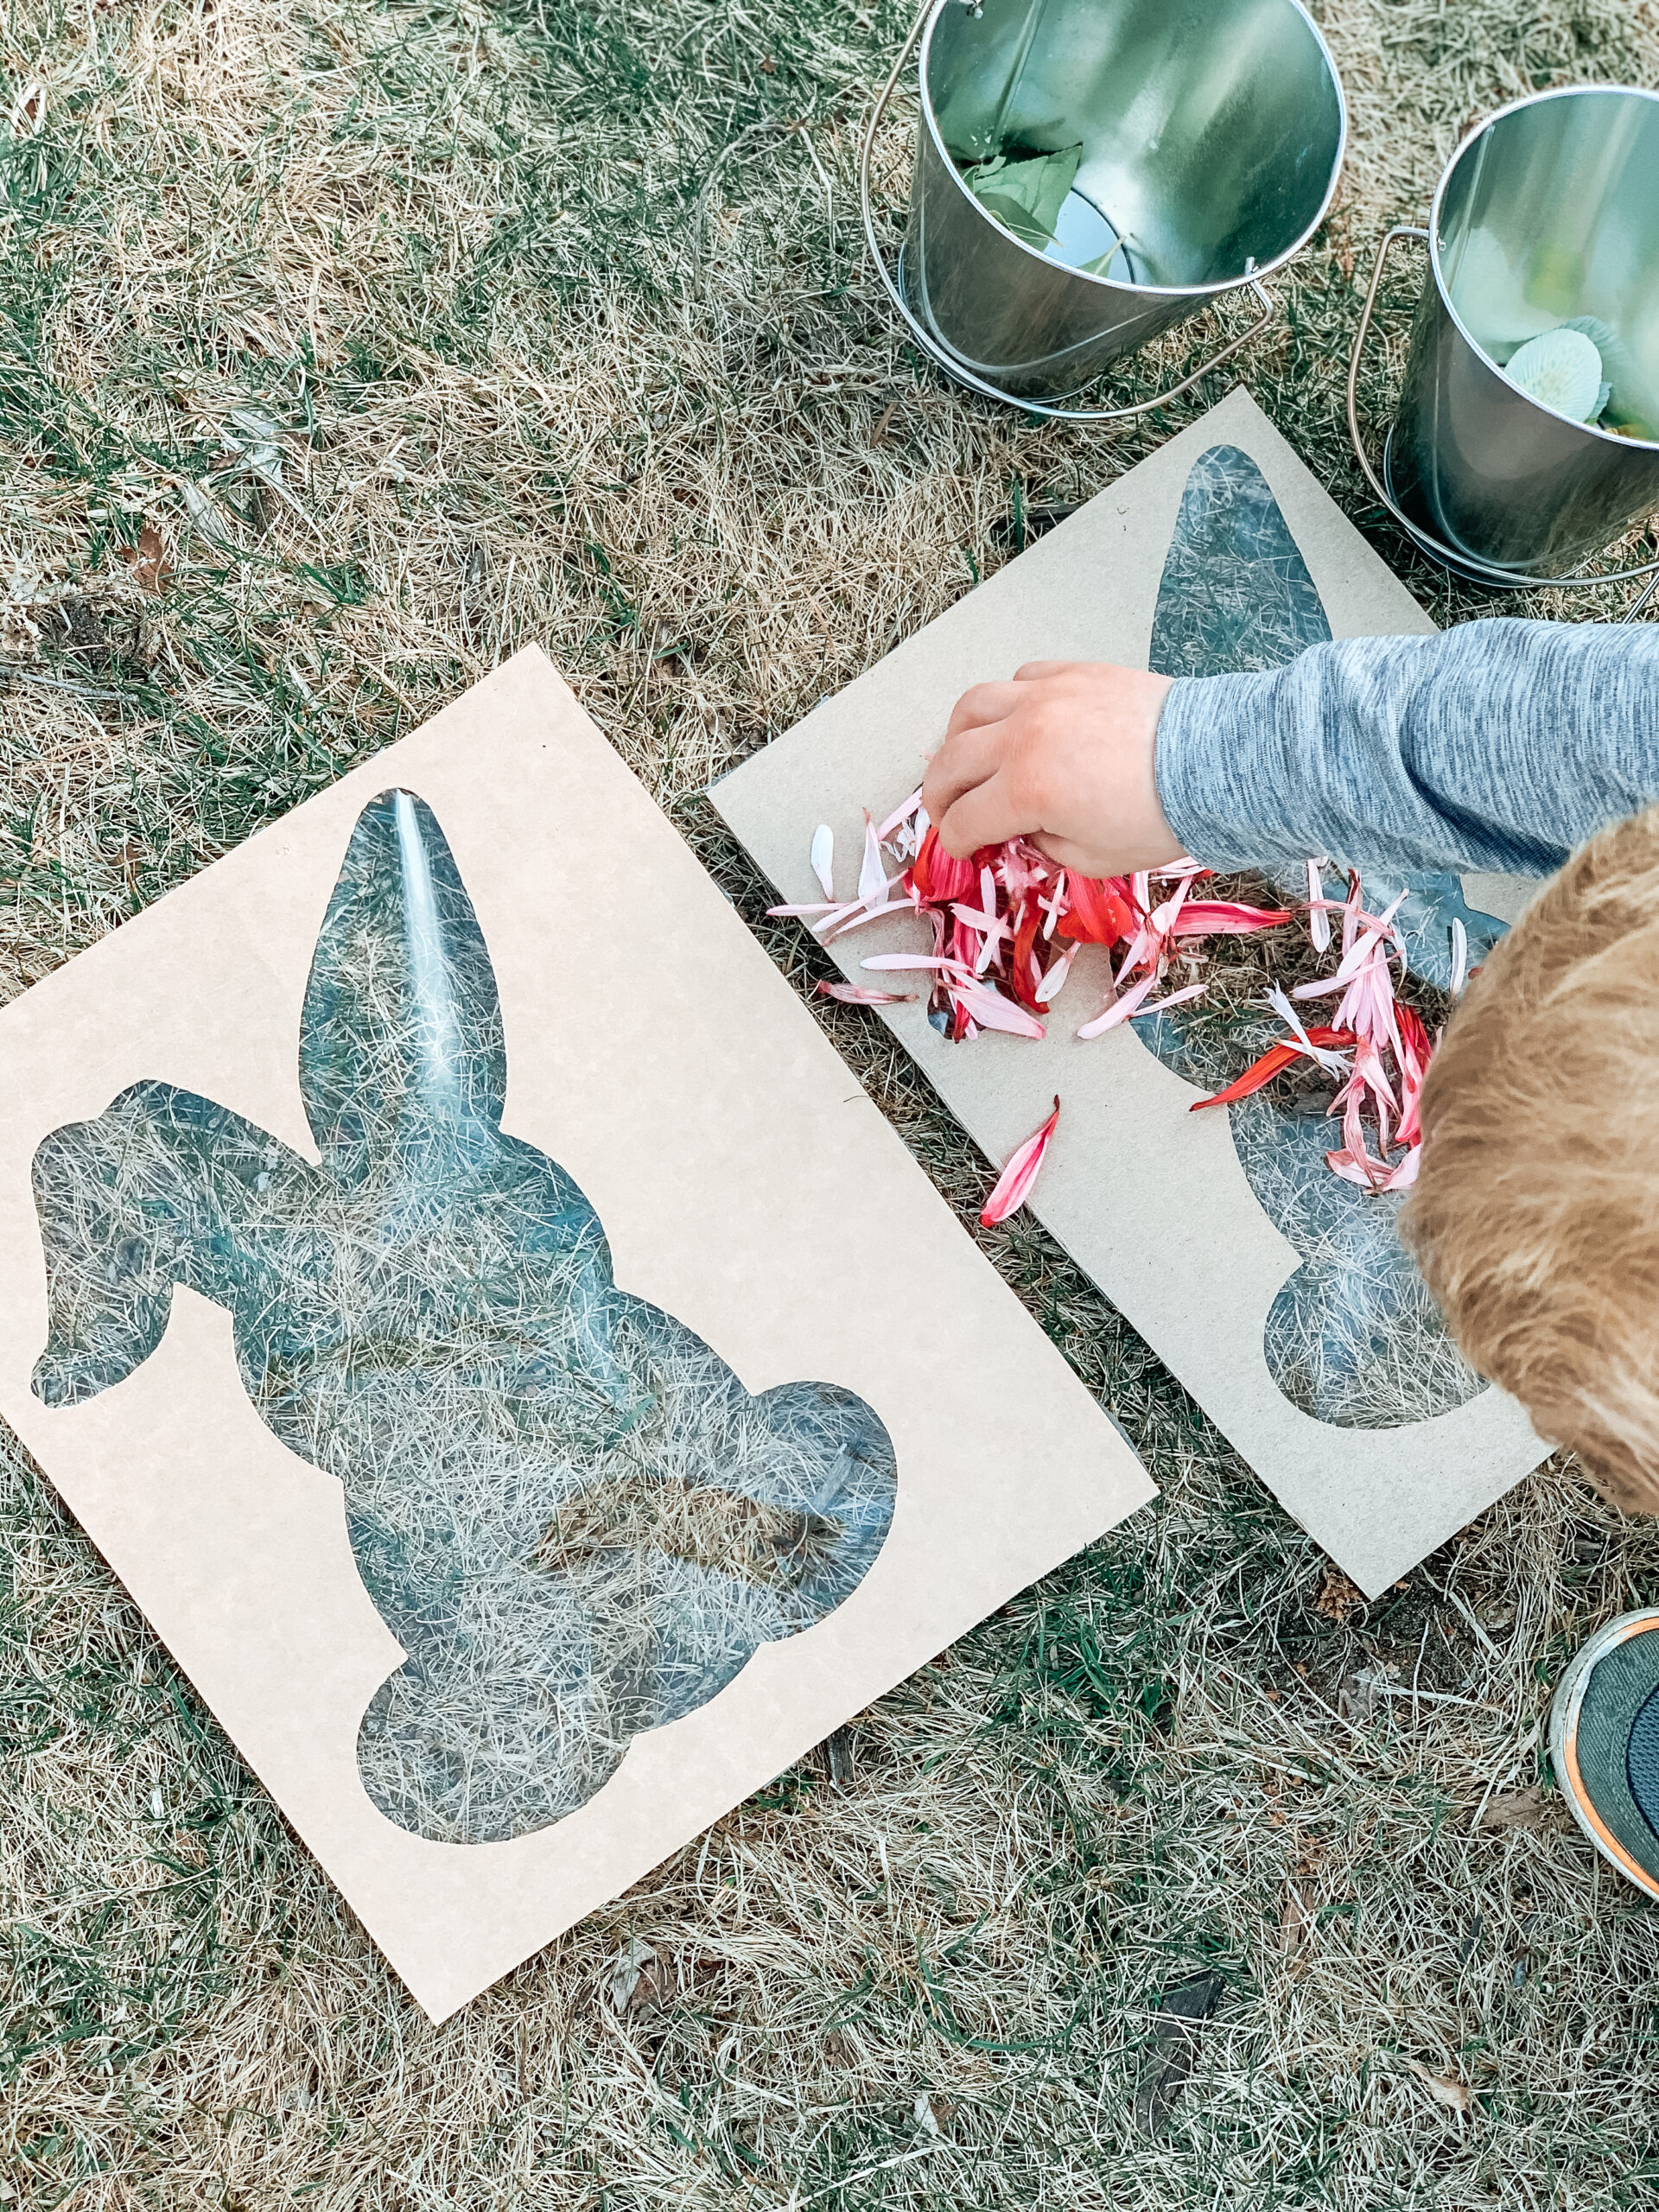 Kid decorating cardboard nature bunny craft